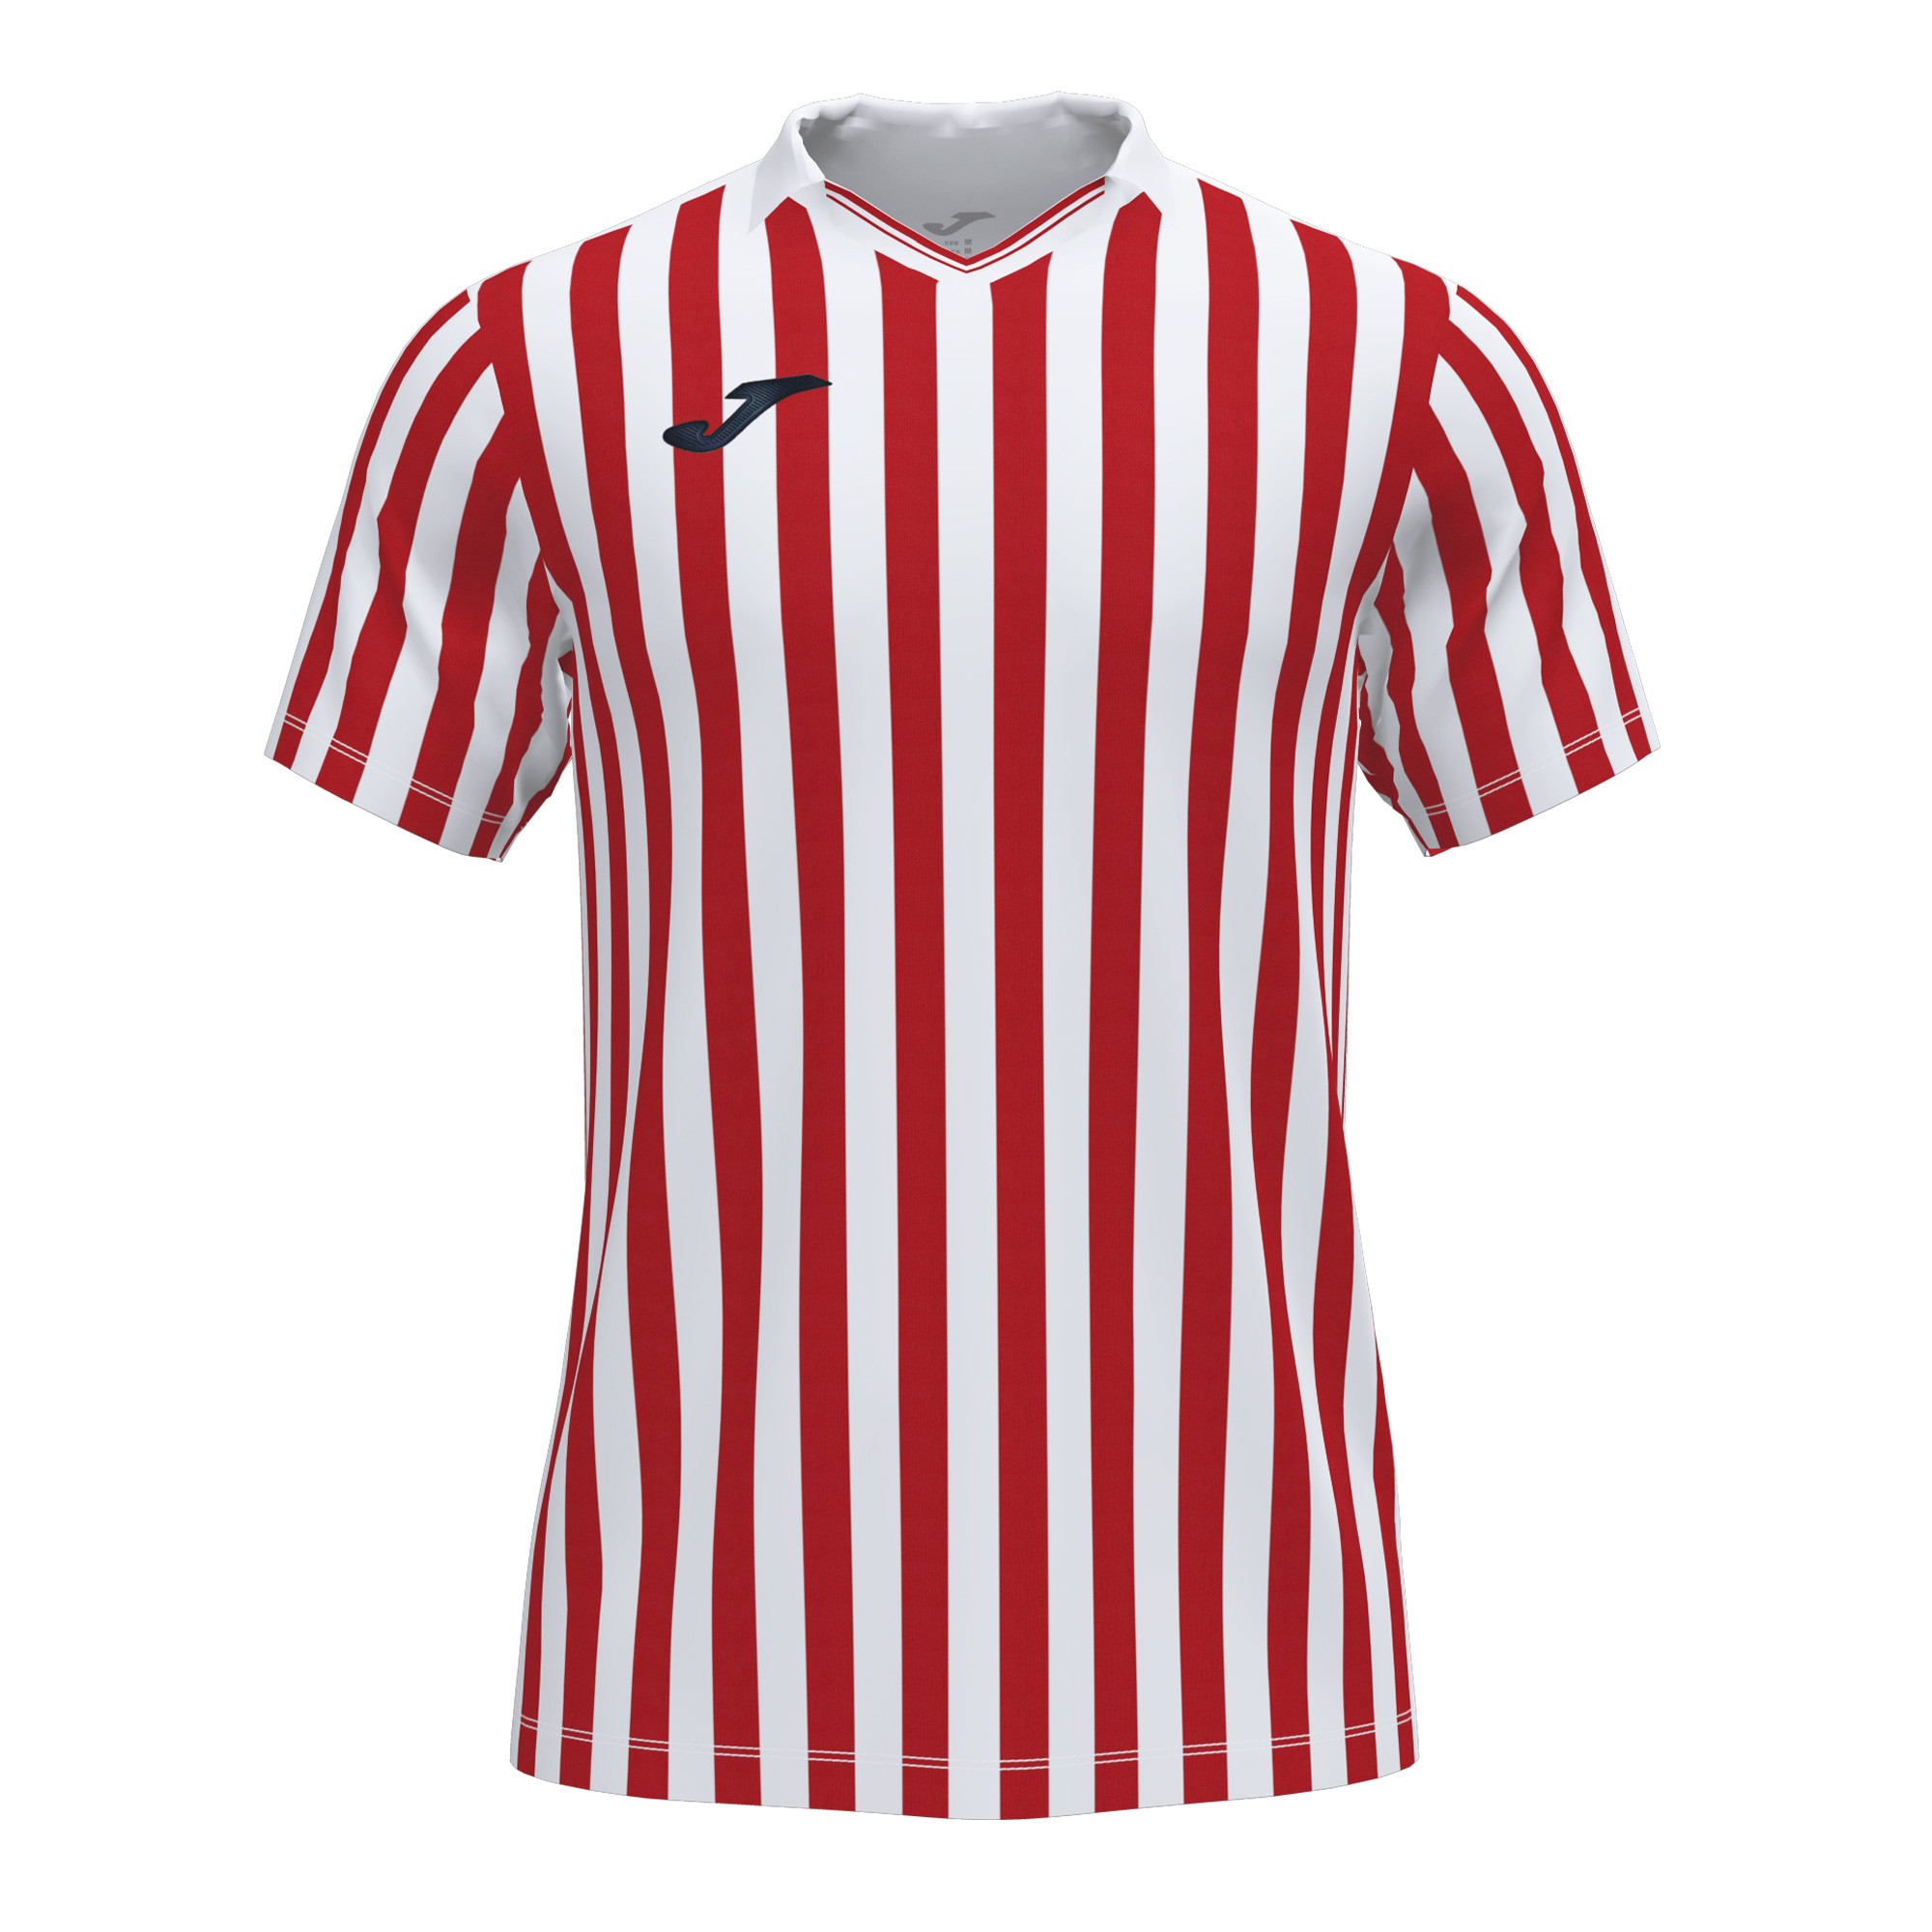 Joma Copa - Camiseta de fútbol de manga corta para hombre